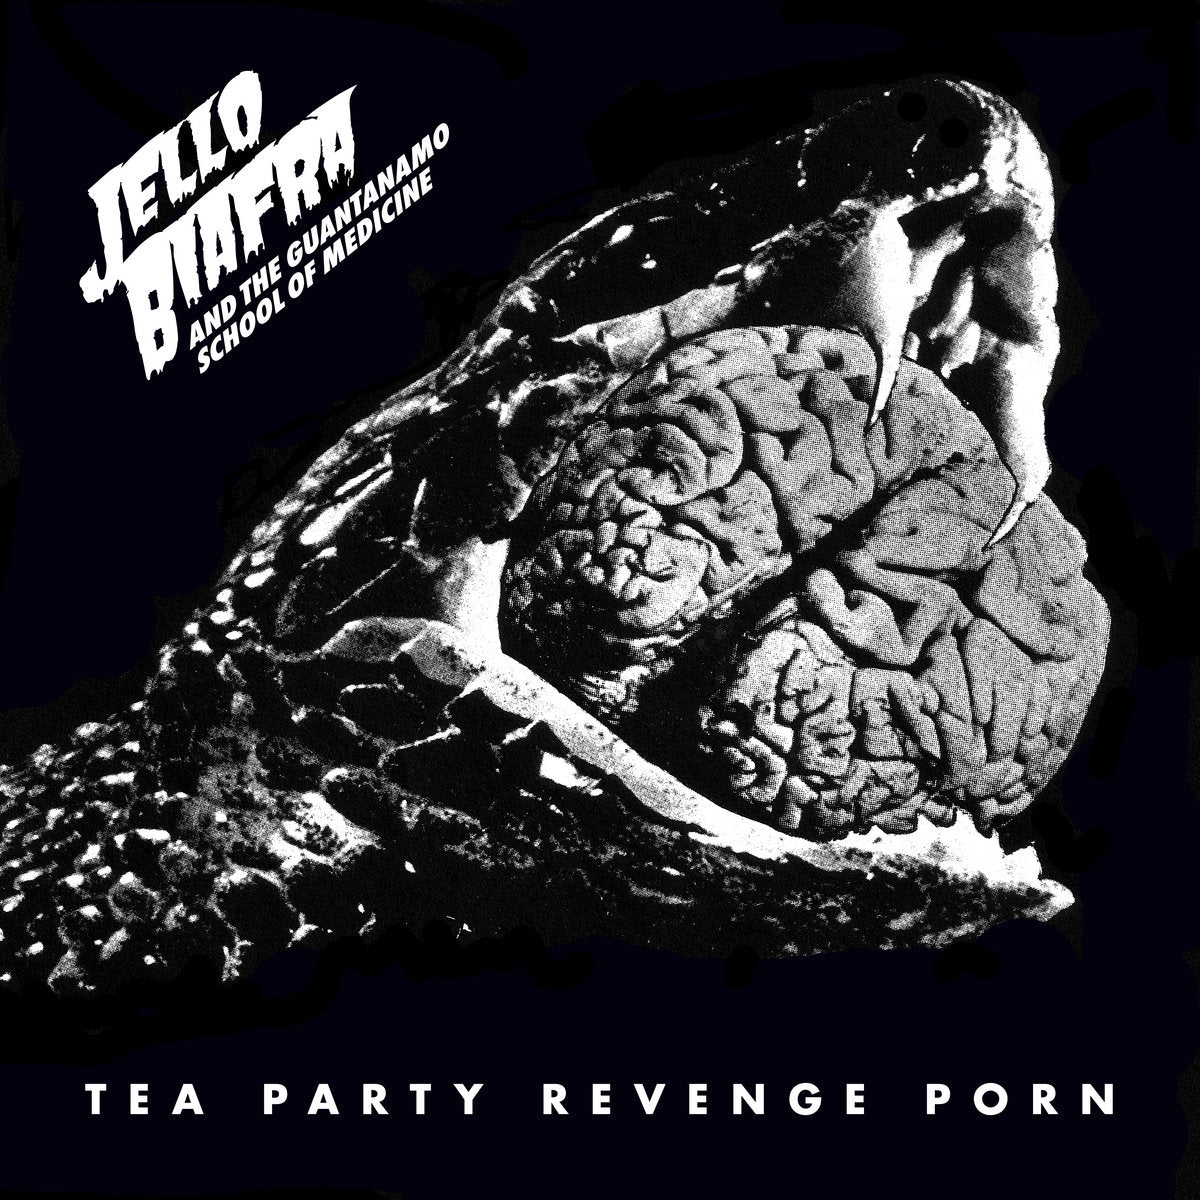 JELLO BIAFRA AND THE GUANTANAMO SCHOOL OF MEDICINE - Tea Party Revenge Porn - LP - Vinyl